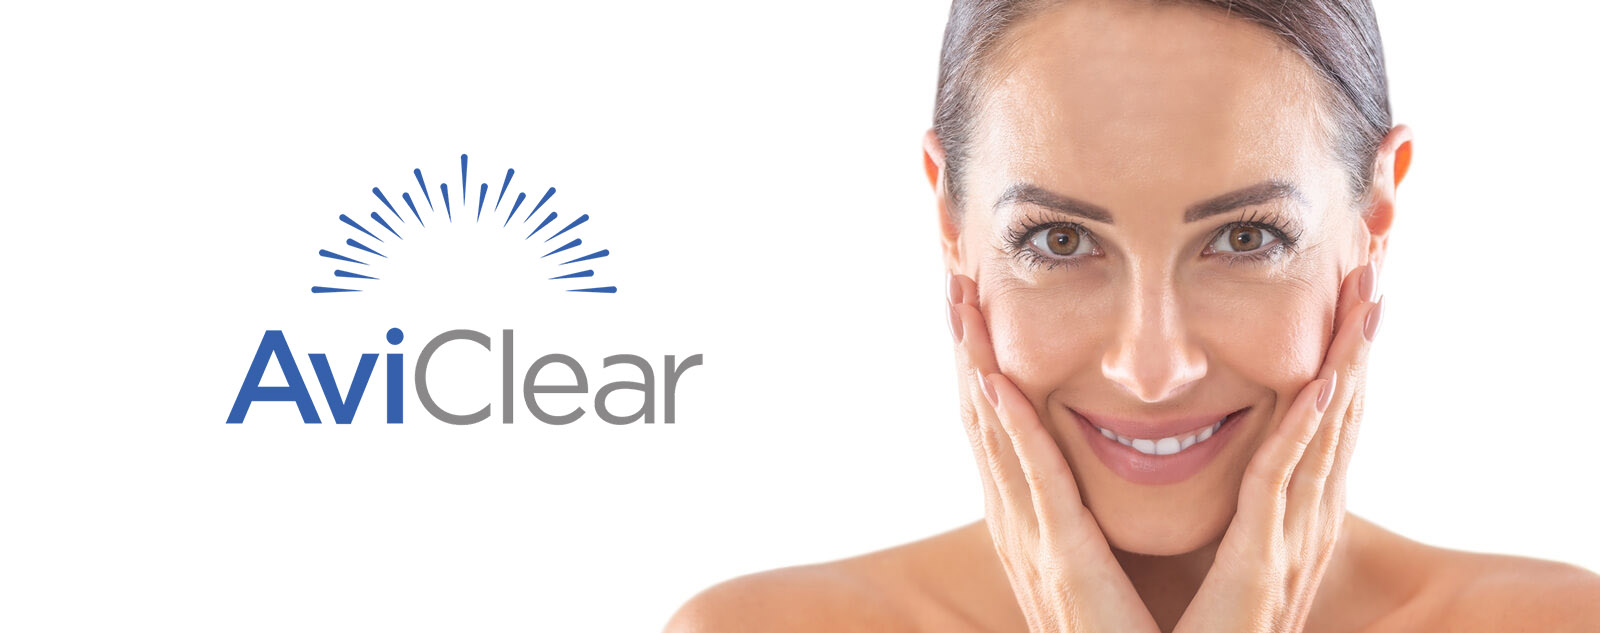 AviClear Acne Treatment